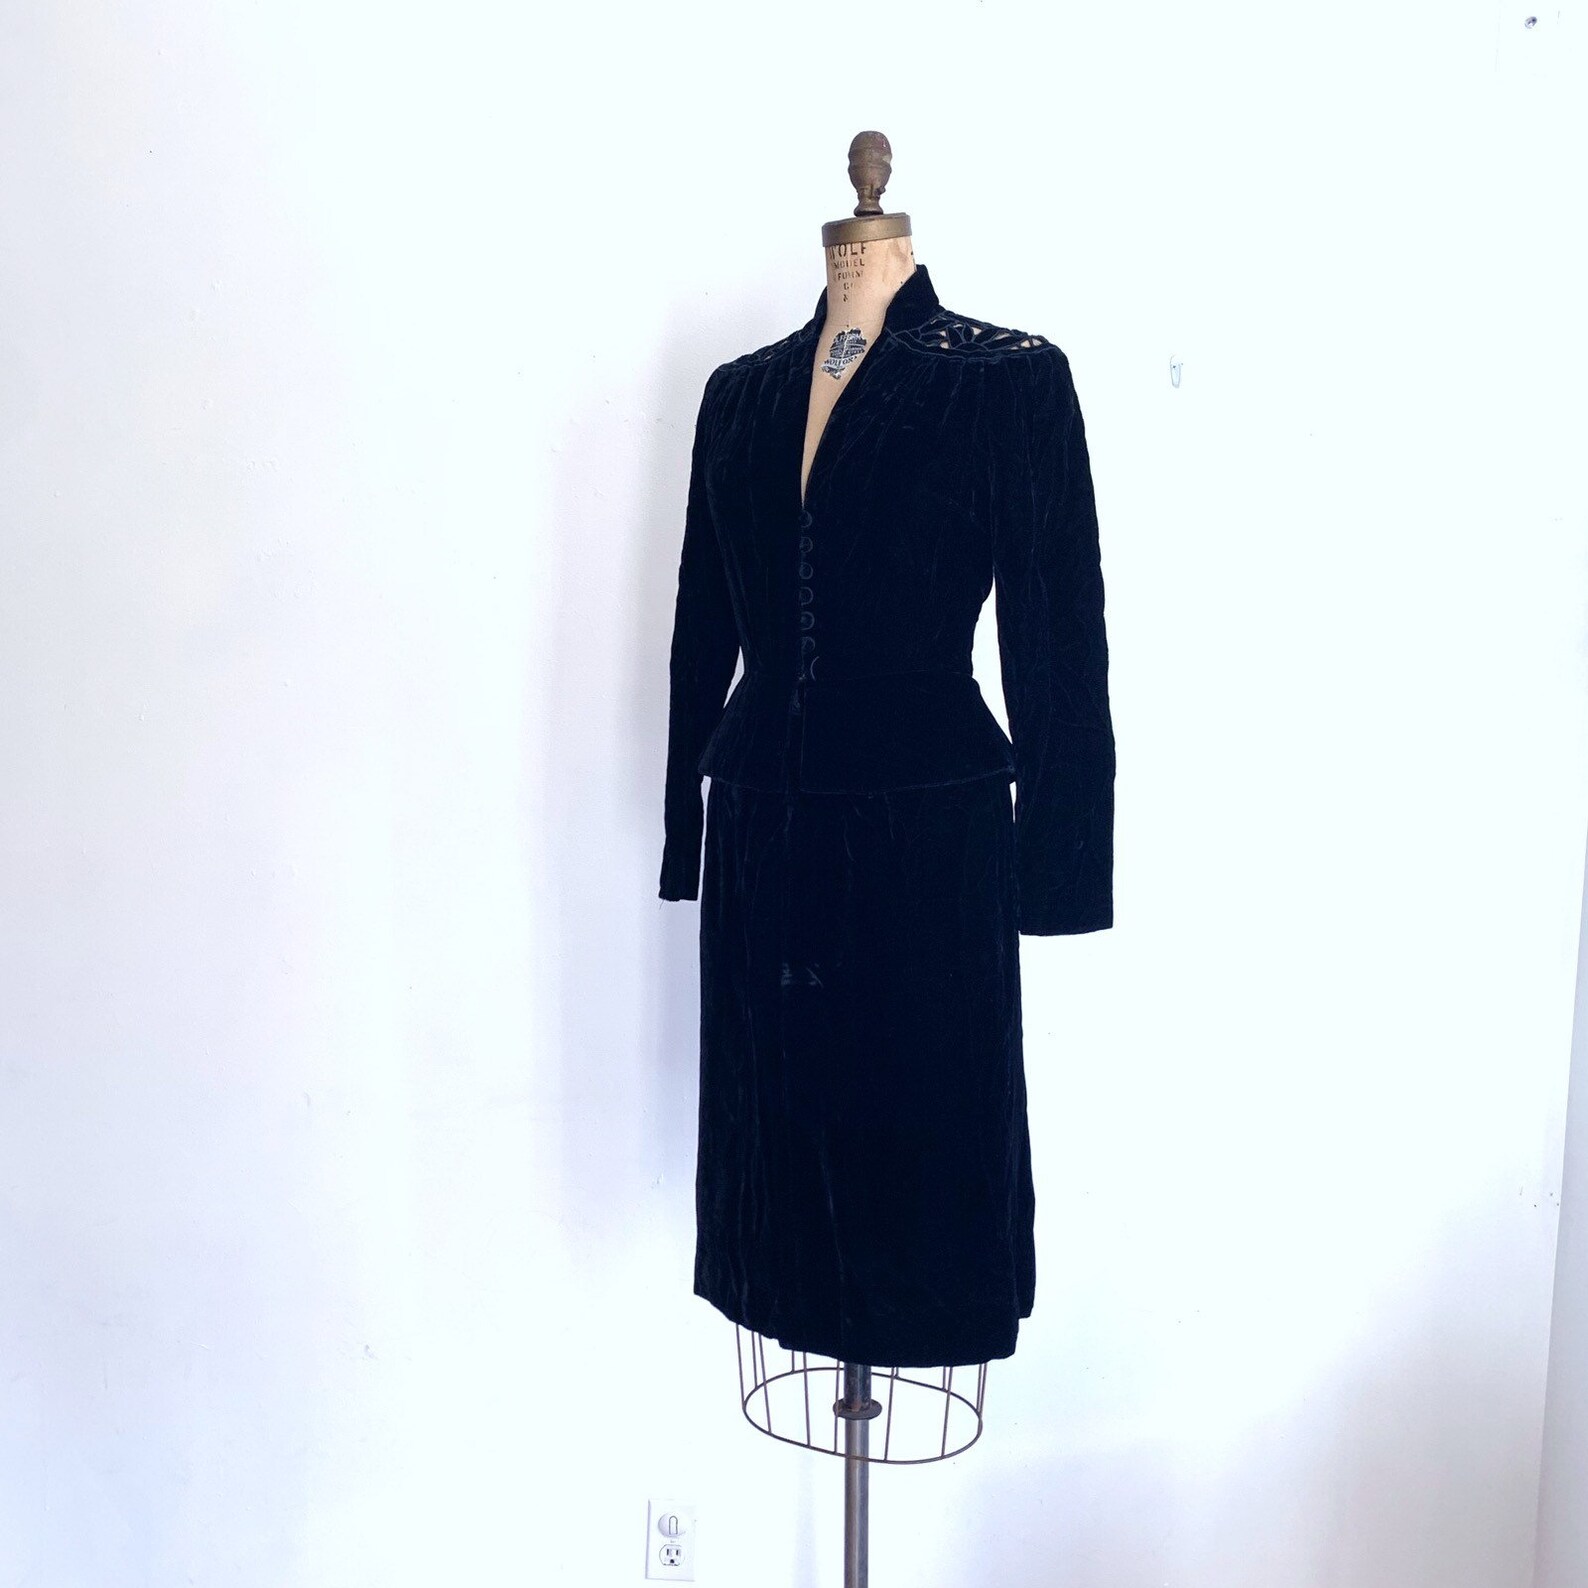 Noir Black Velvet Suit / Vintage Peplum Skirt Suit / 70s Does | Etsy